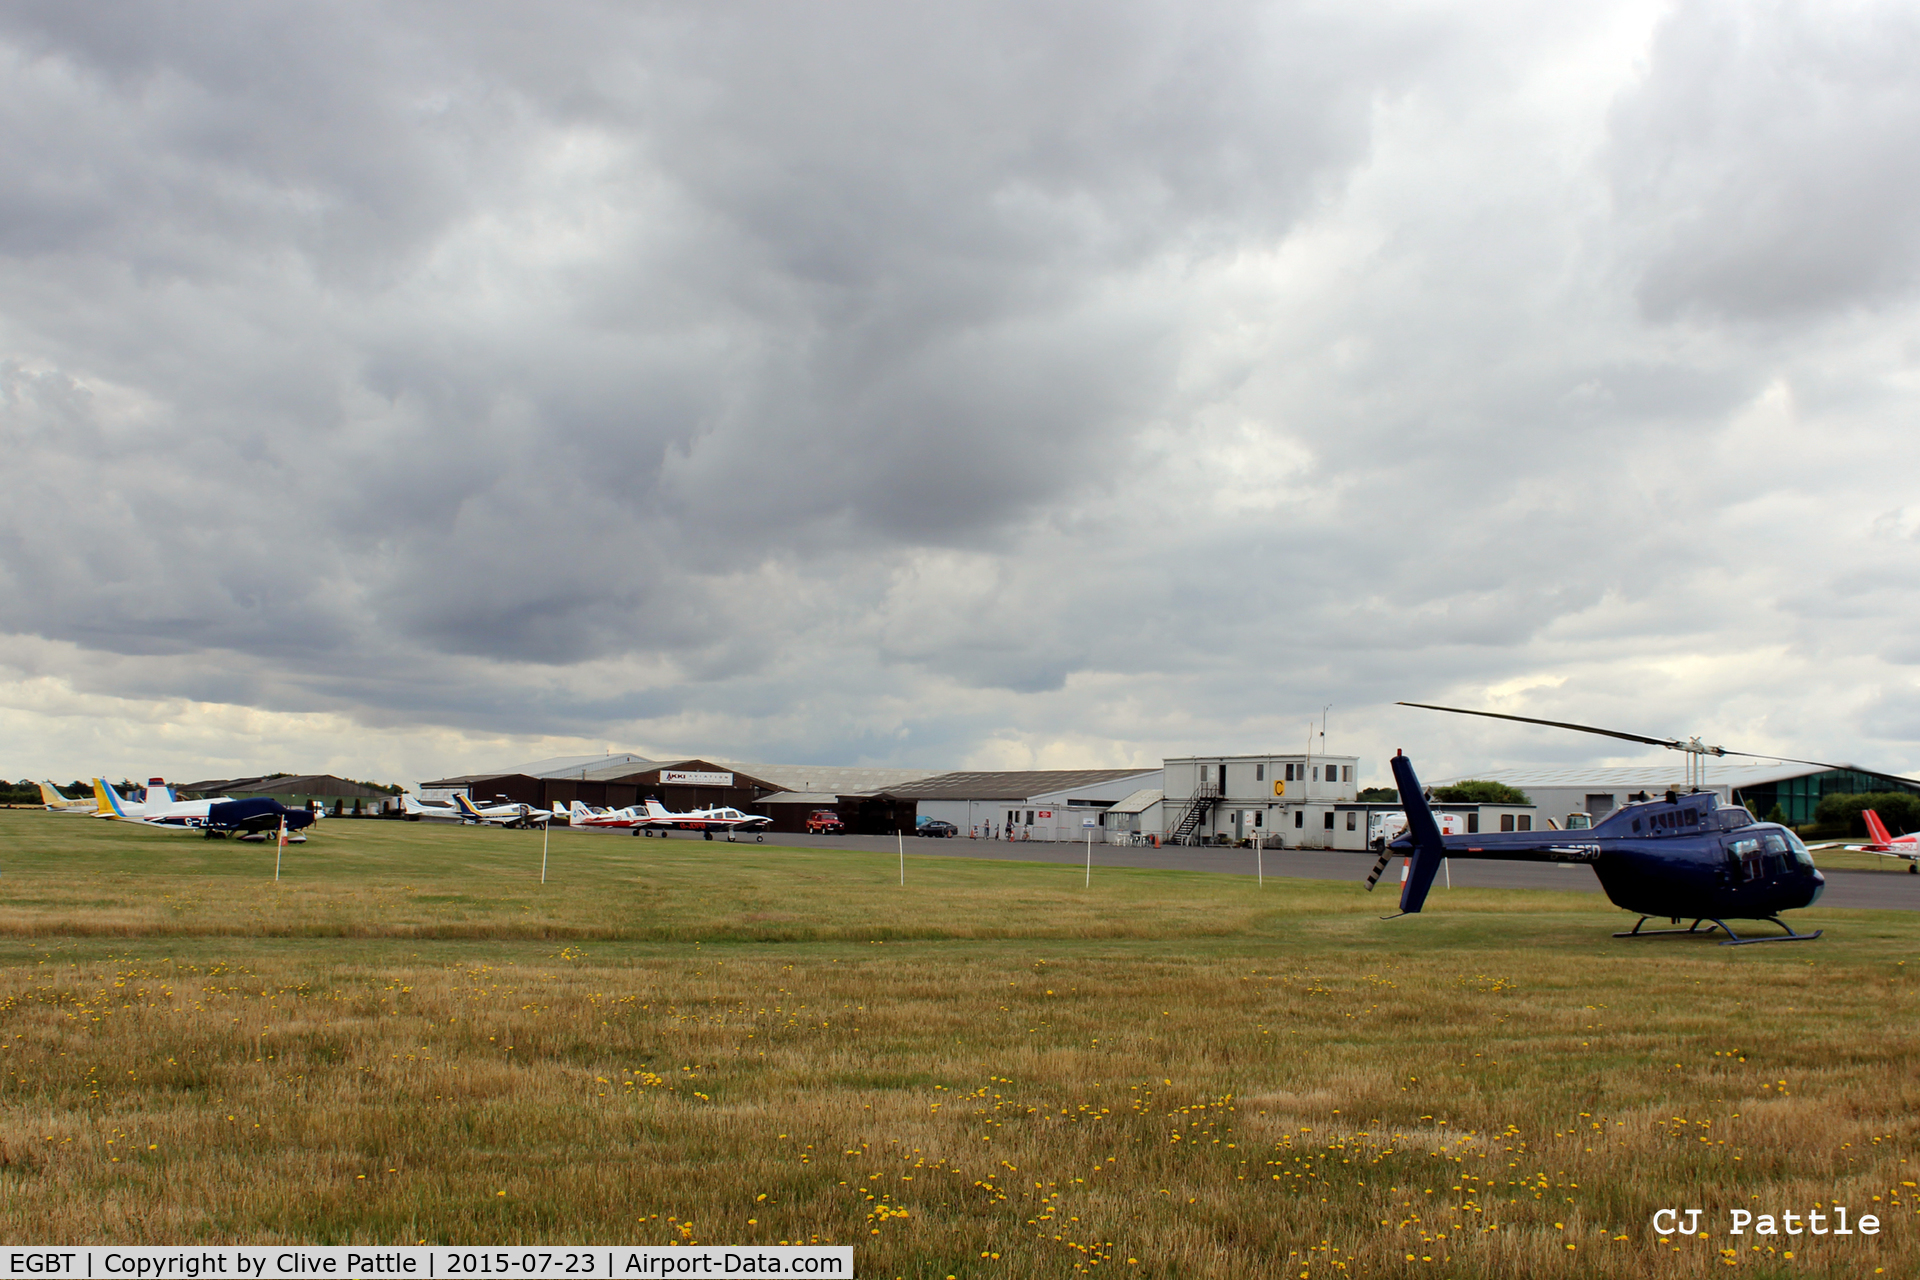 Turweston Aerodrome Airport, Turweston, England United Kingdom (EGBT) - Airfield view at Turweston EGBT